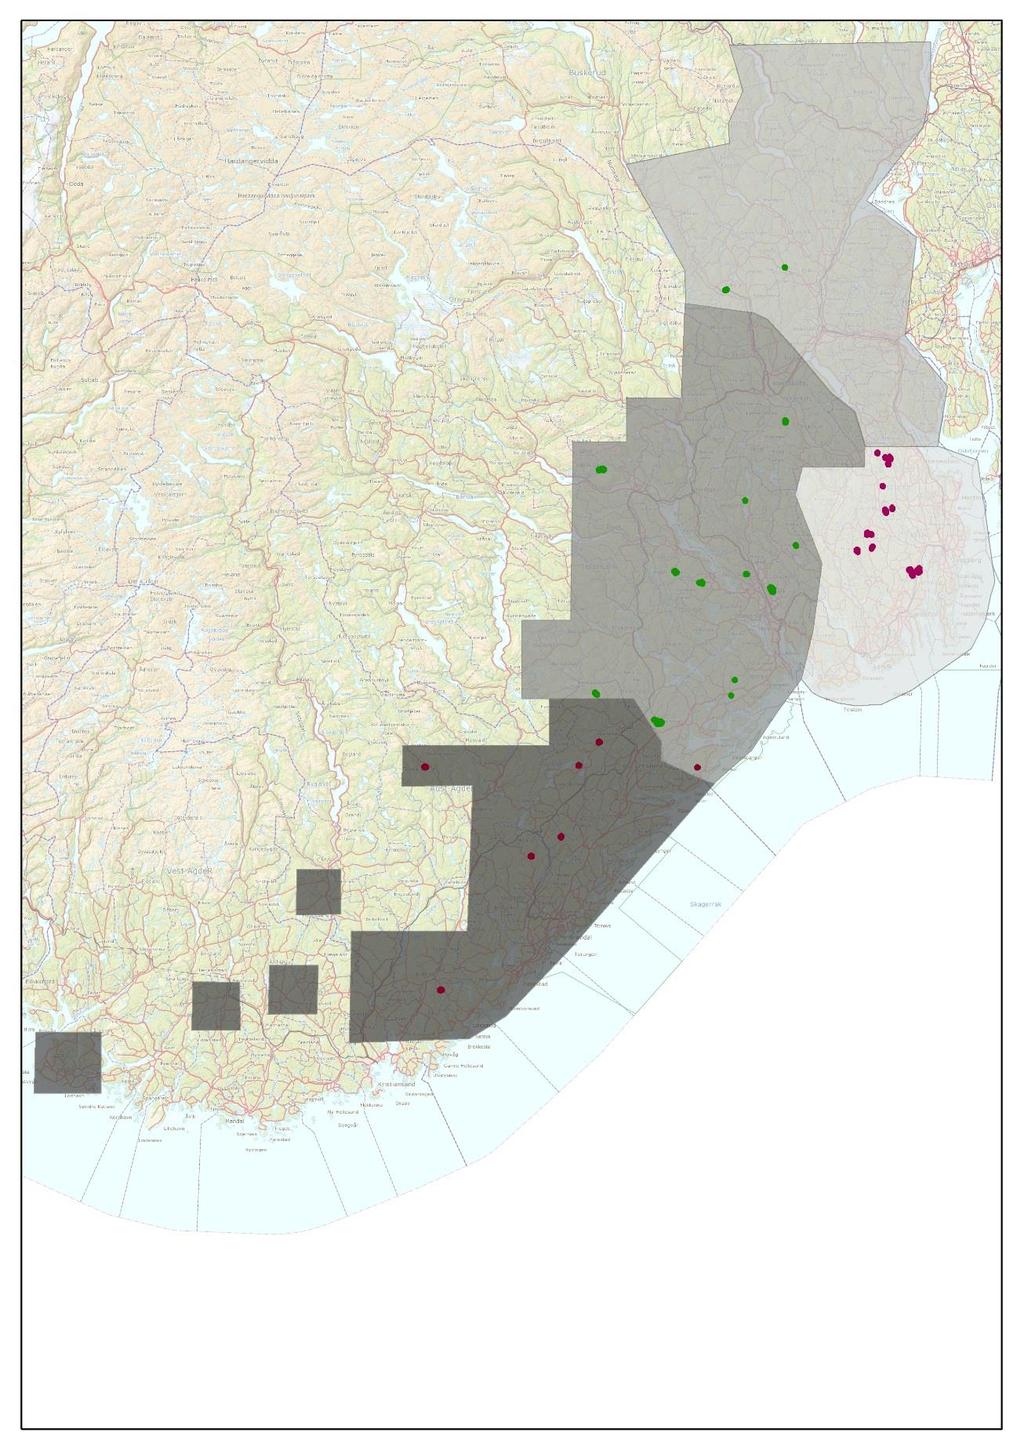 Figur 1. 37 lokaliteter registrert ved høgmyrkartlegging på Østlandet og Sørlandet 2016.